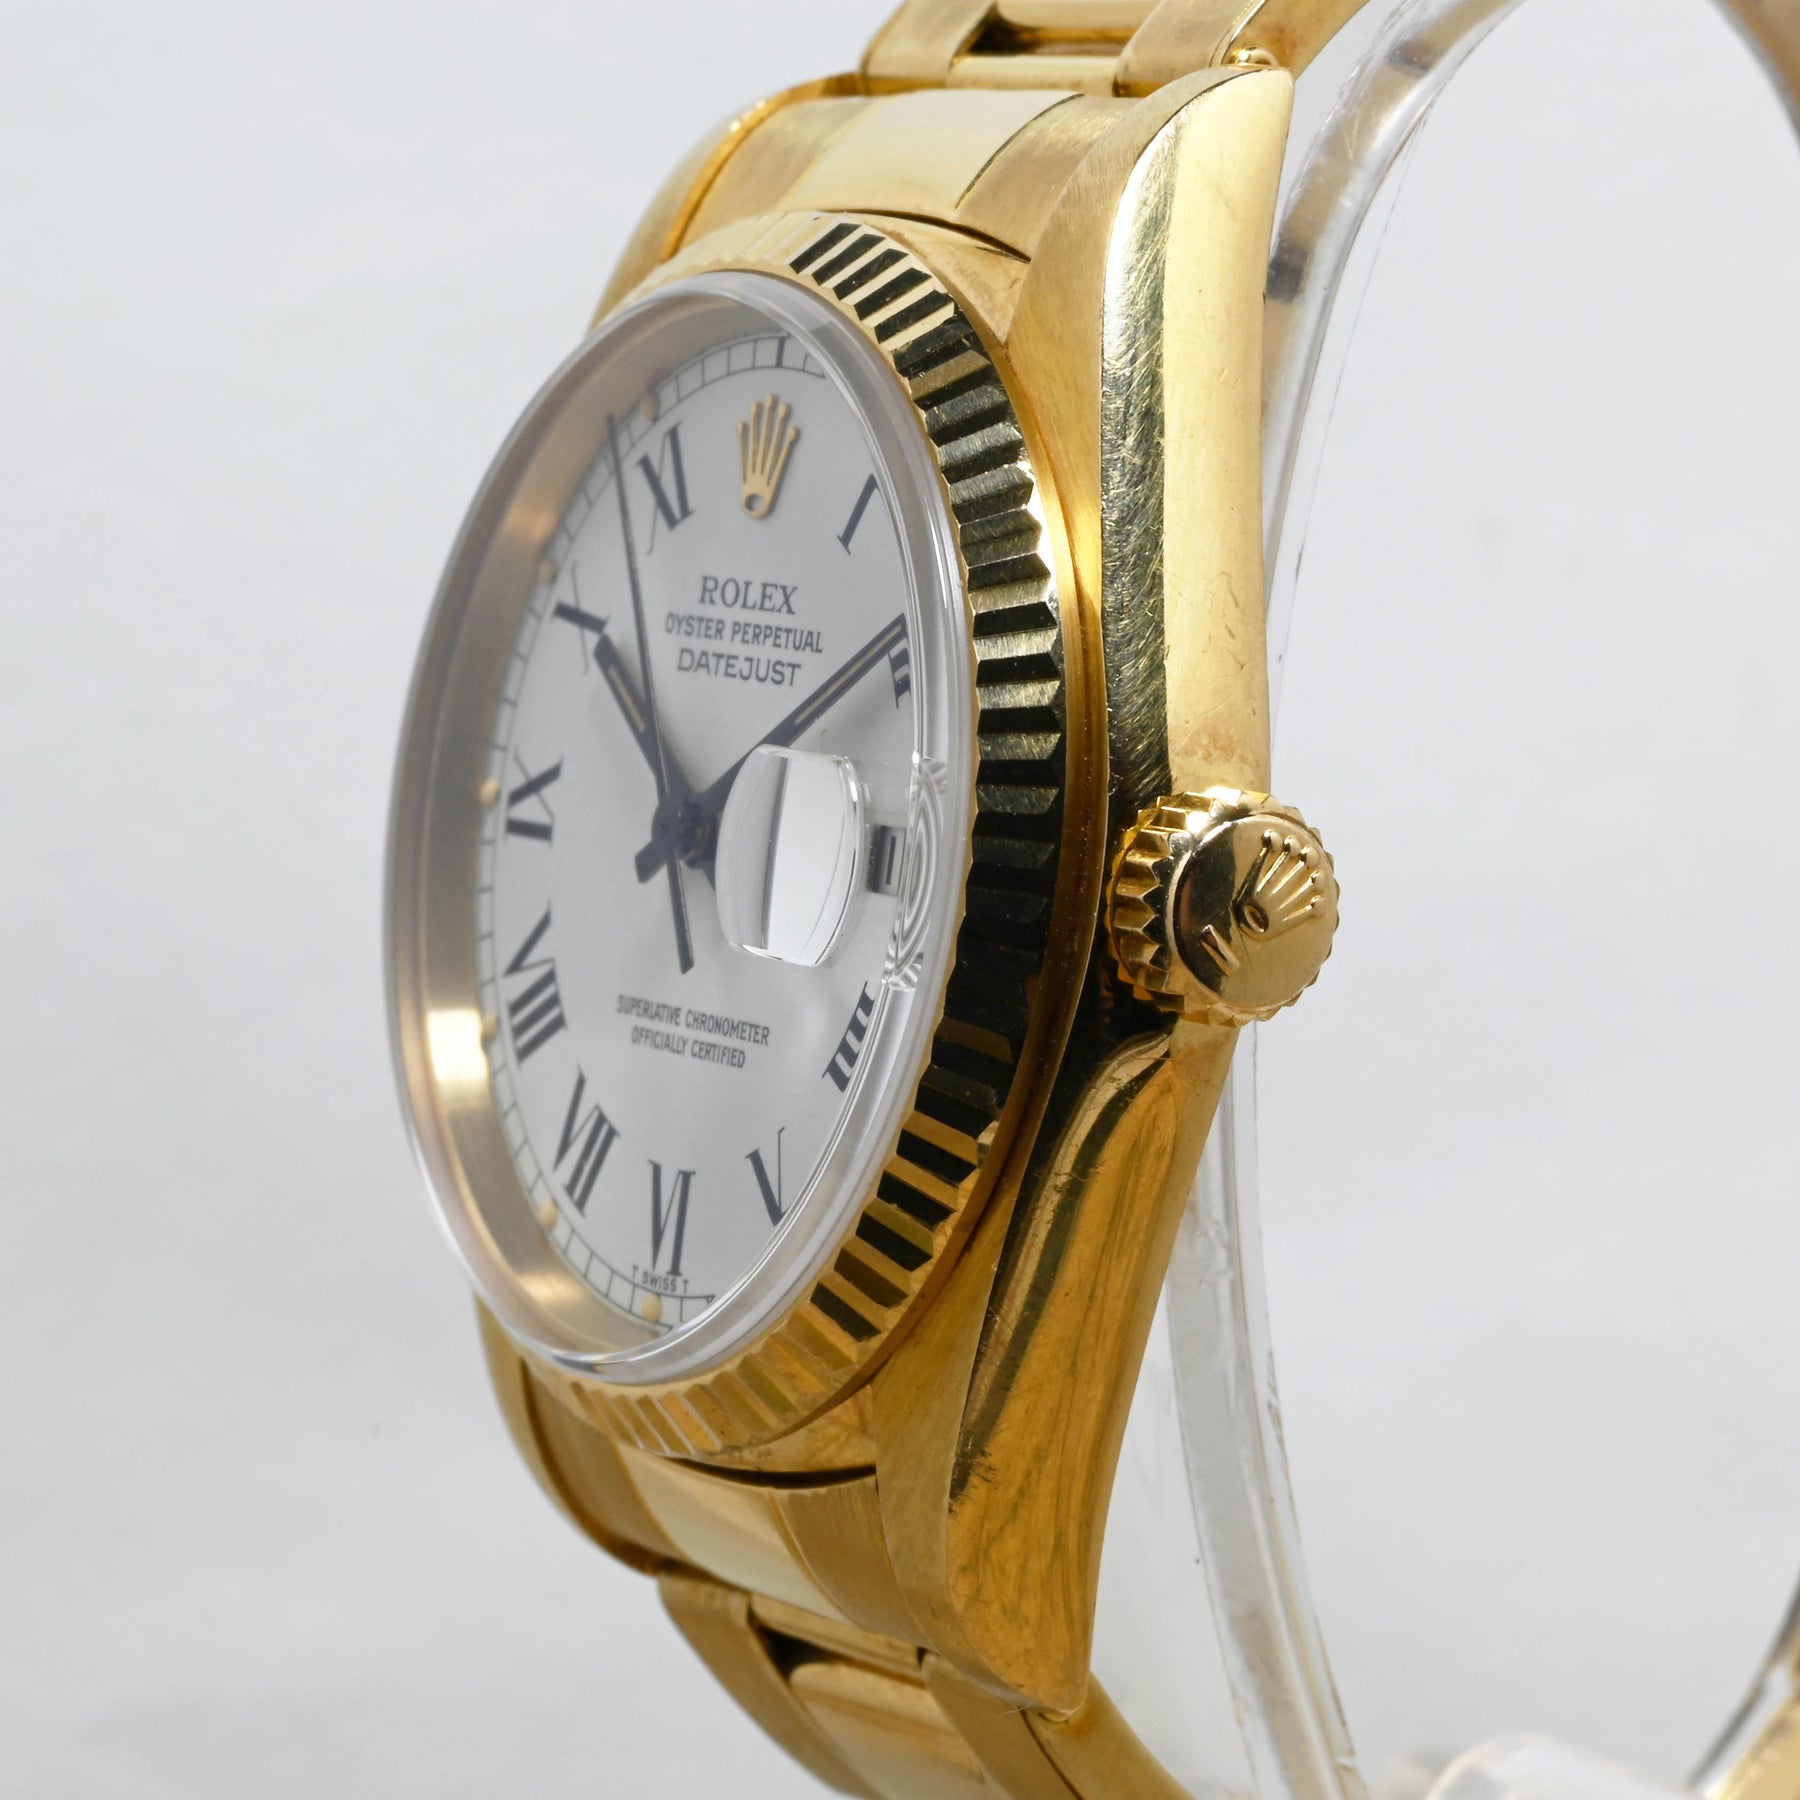 1979 Rolex Datejust Buckley Dial on Oyster Bracelet Ref. 16018